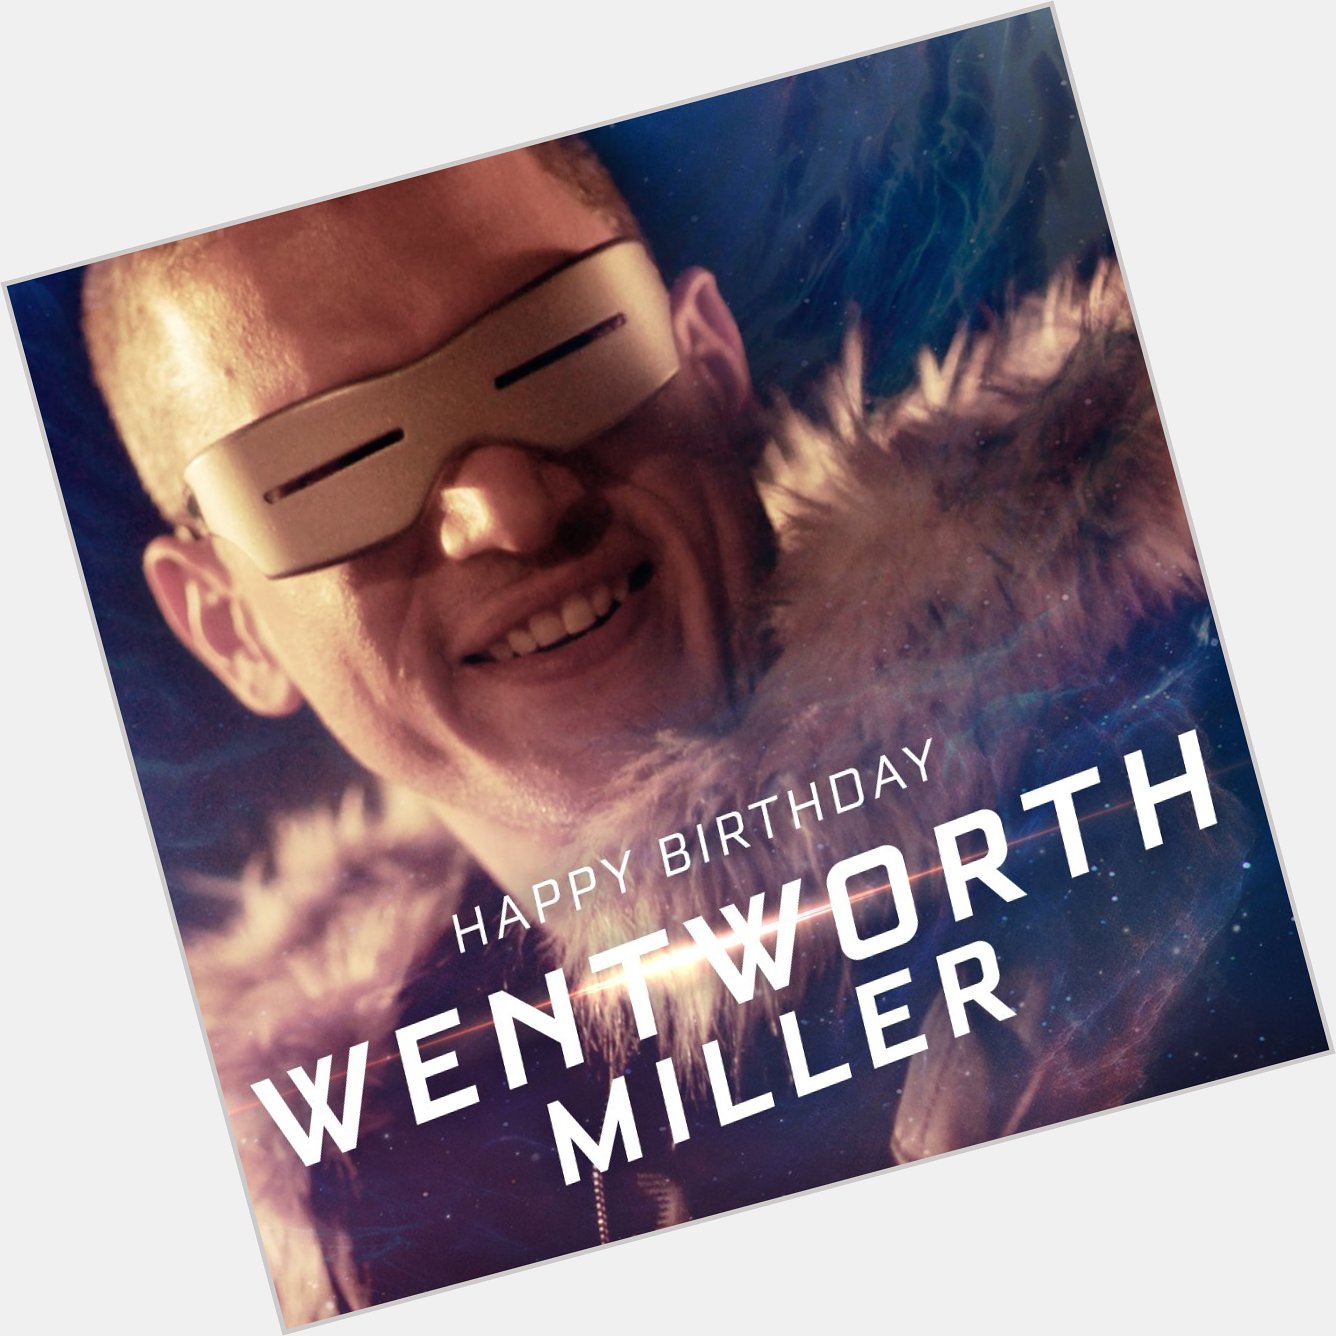 The coolest birthday ever. Happy Birthday, Wentworth Miller! 